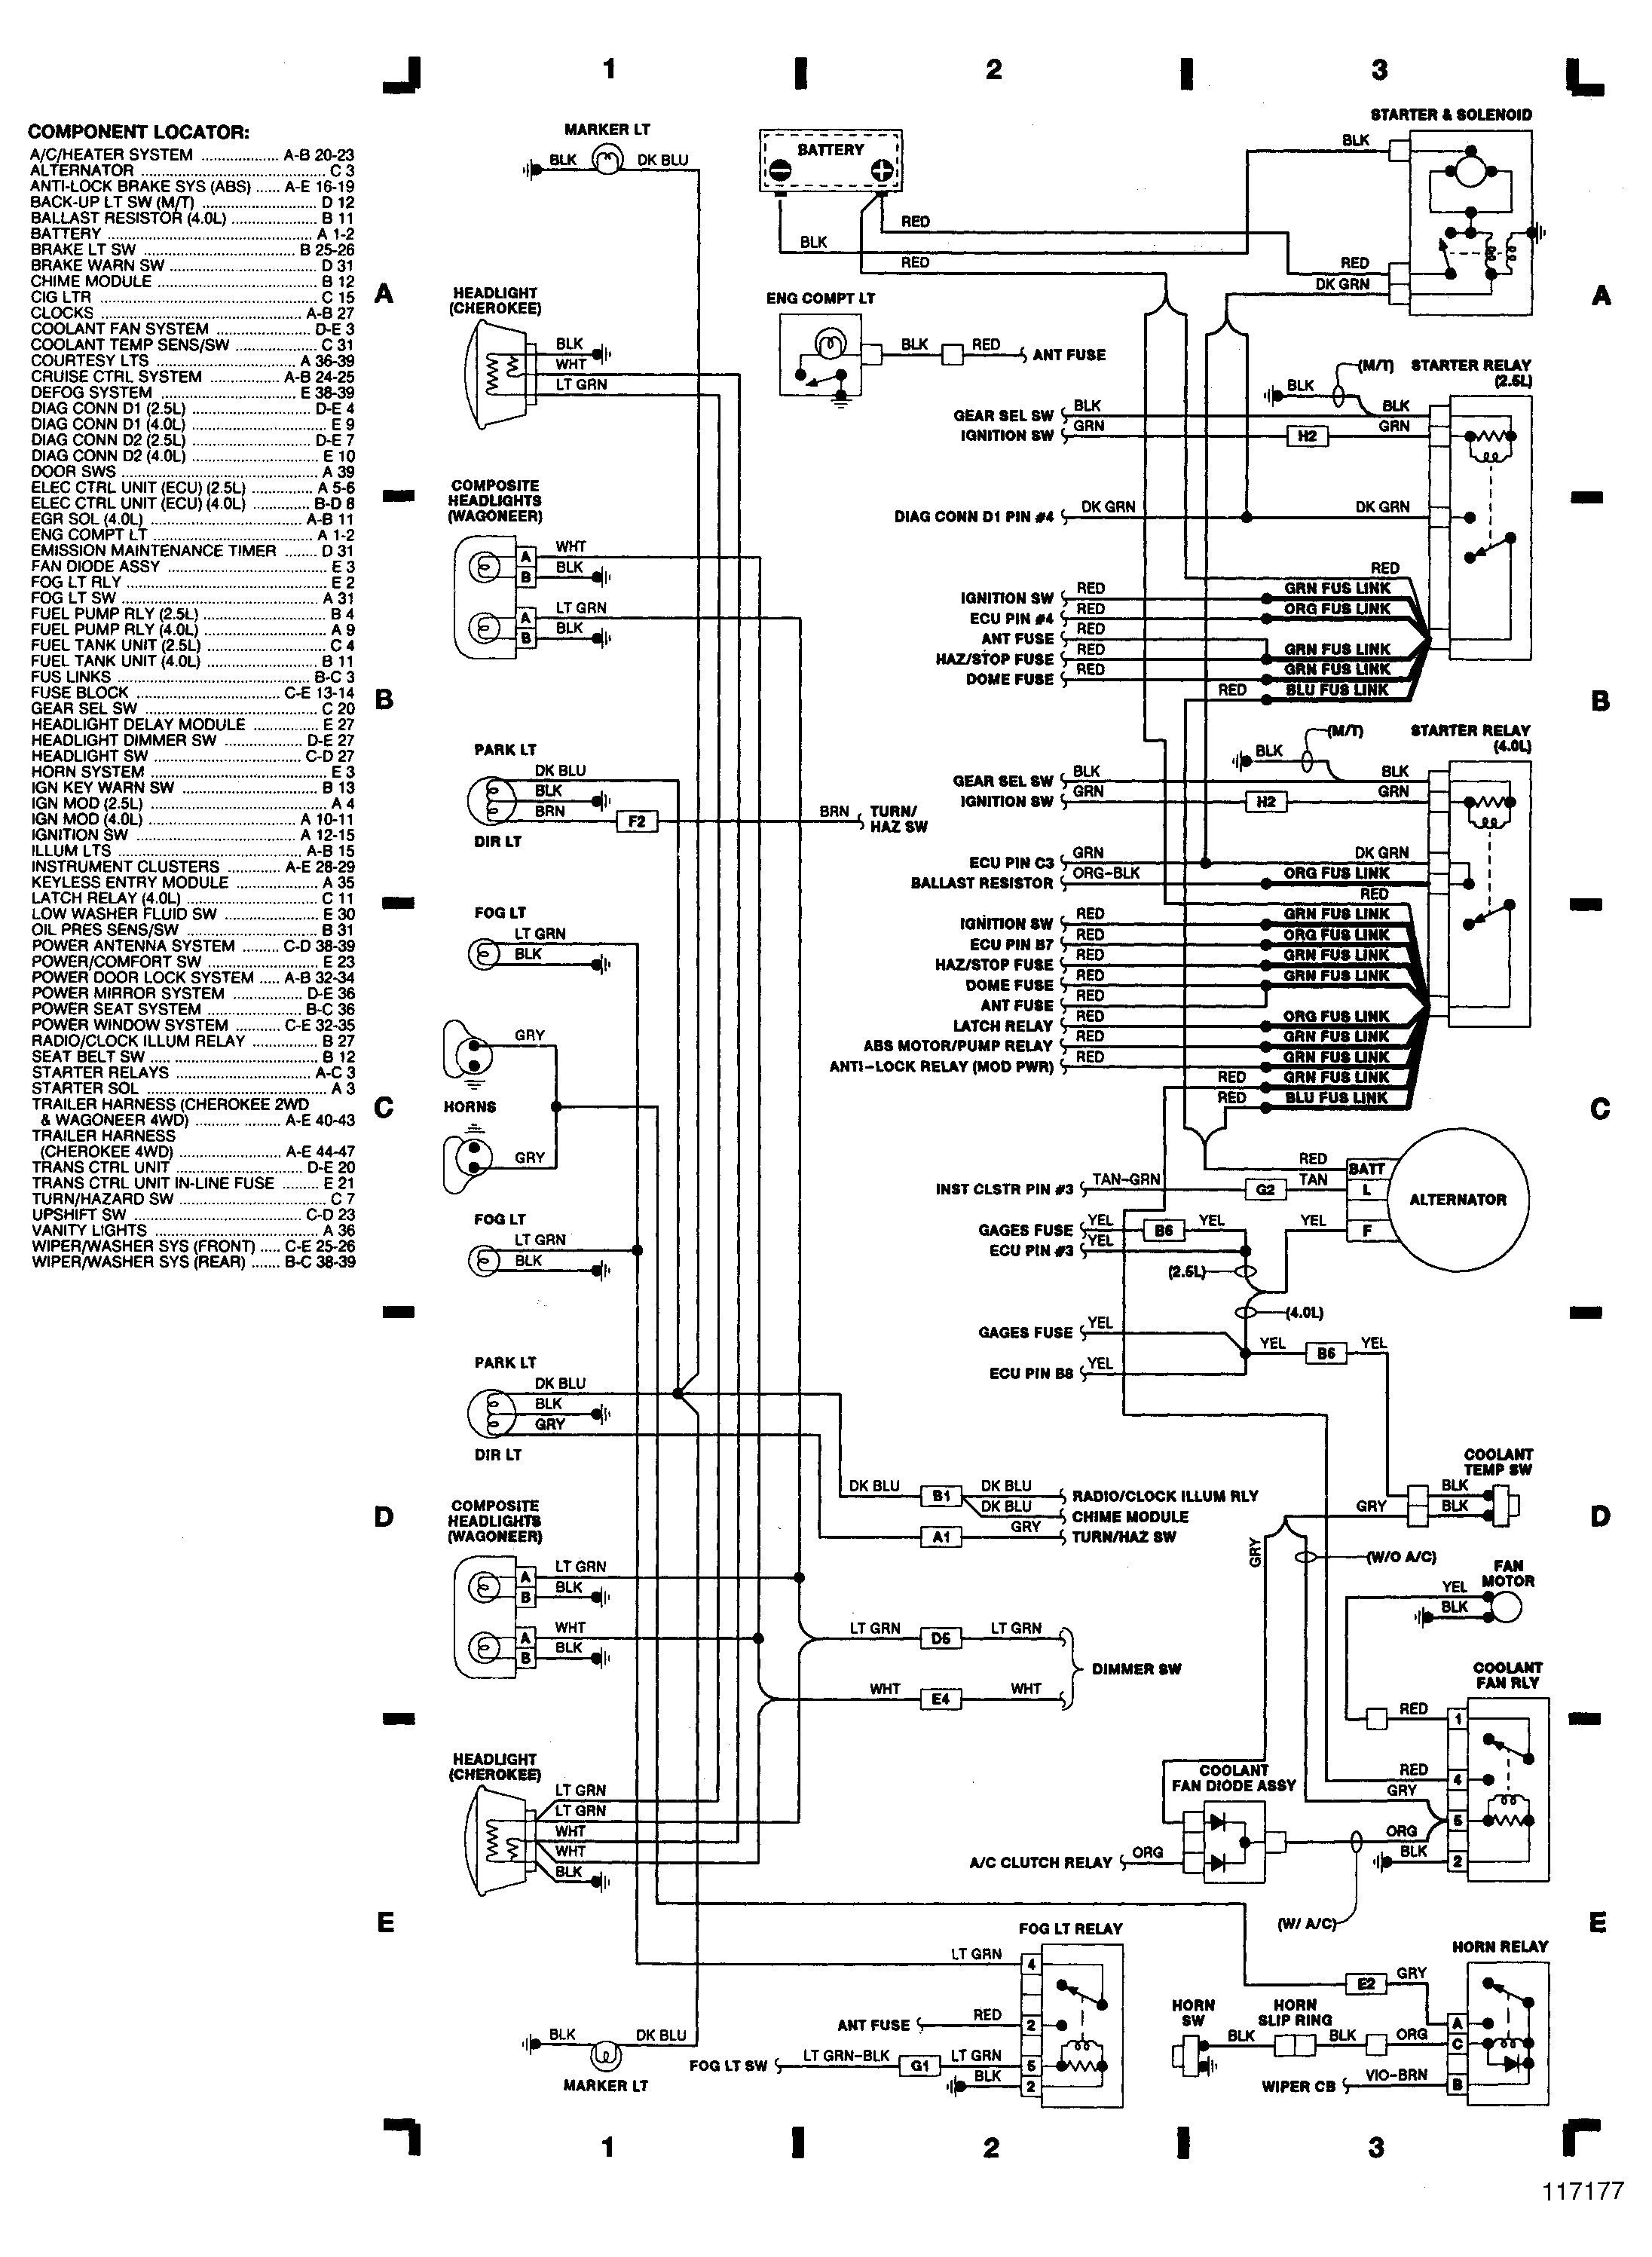 likewise jeep cj7 vacuum diagram on 87 jeep yj wiring harness 93 chrysler fwd vacuum diagrams